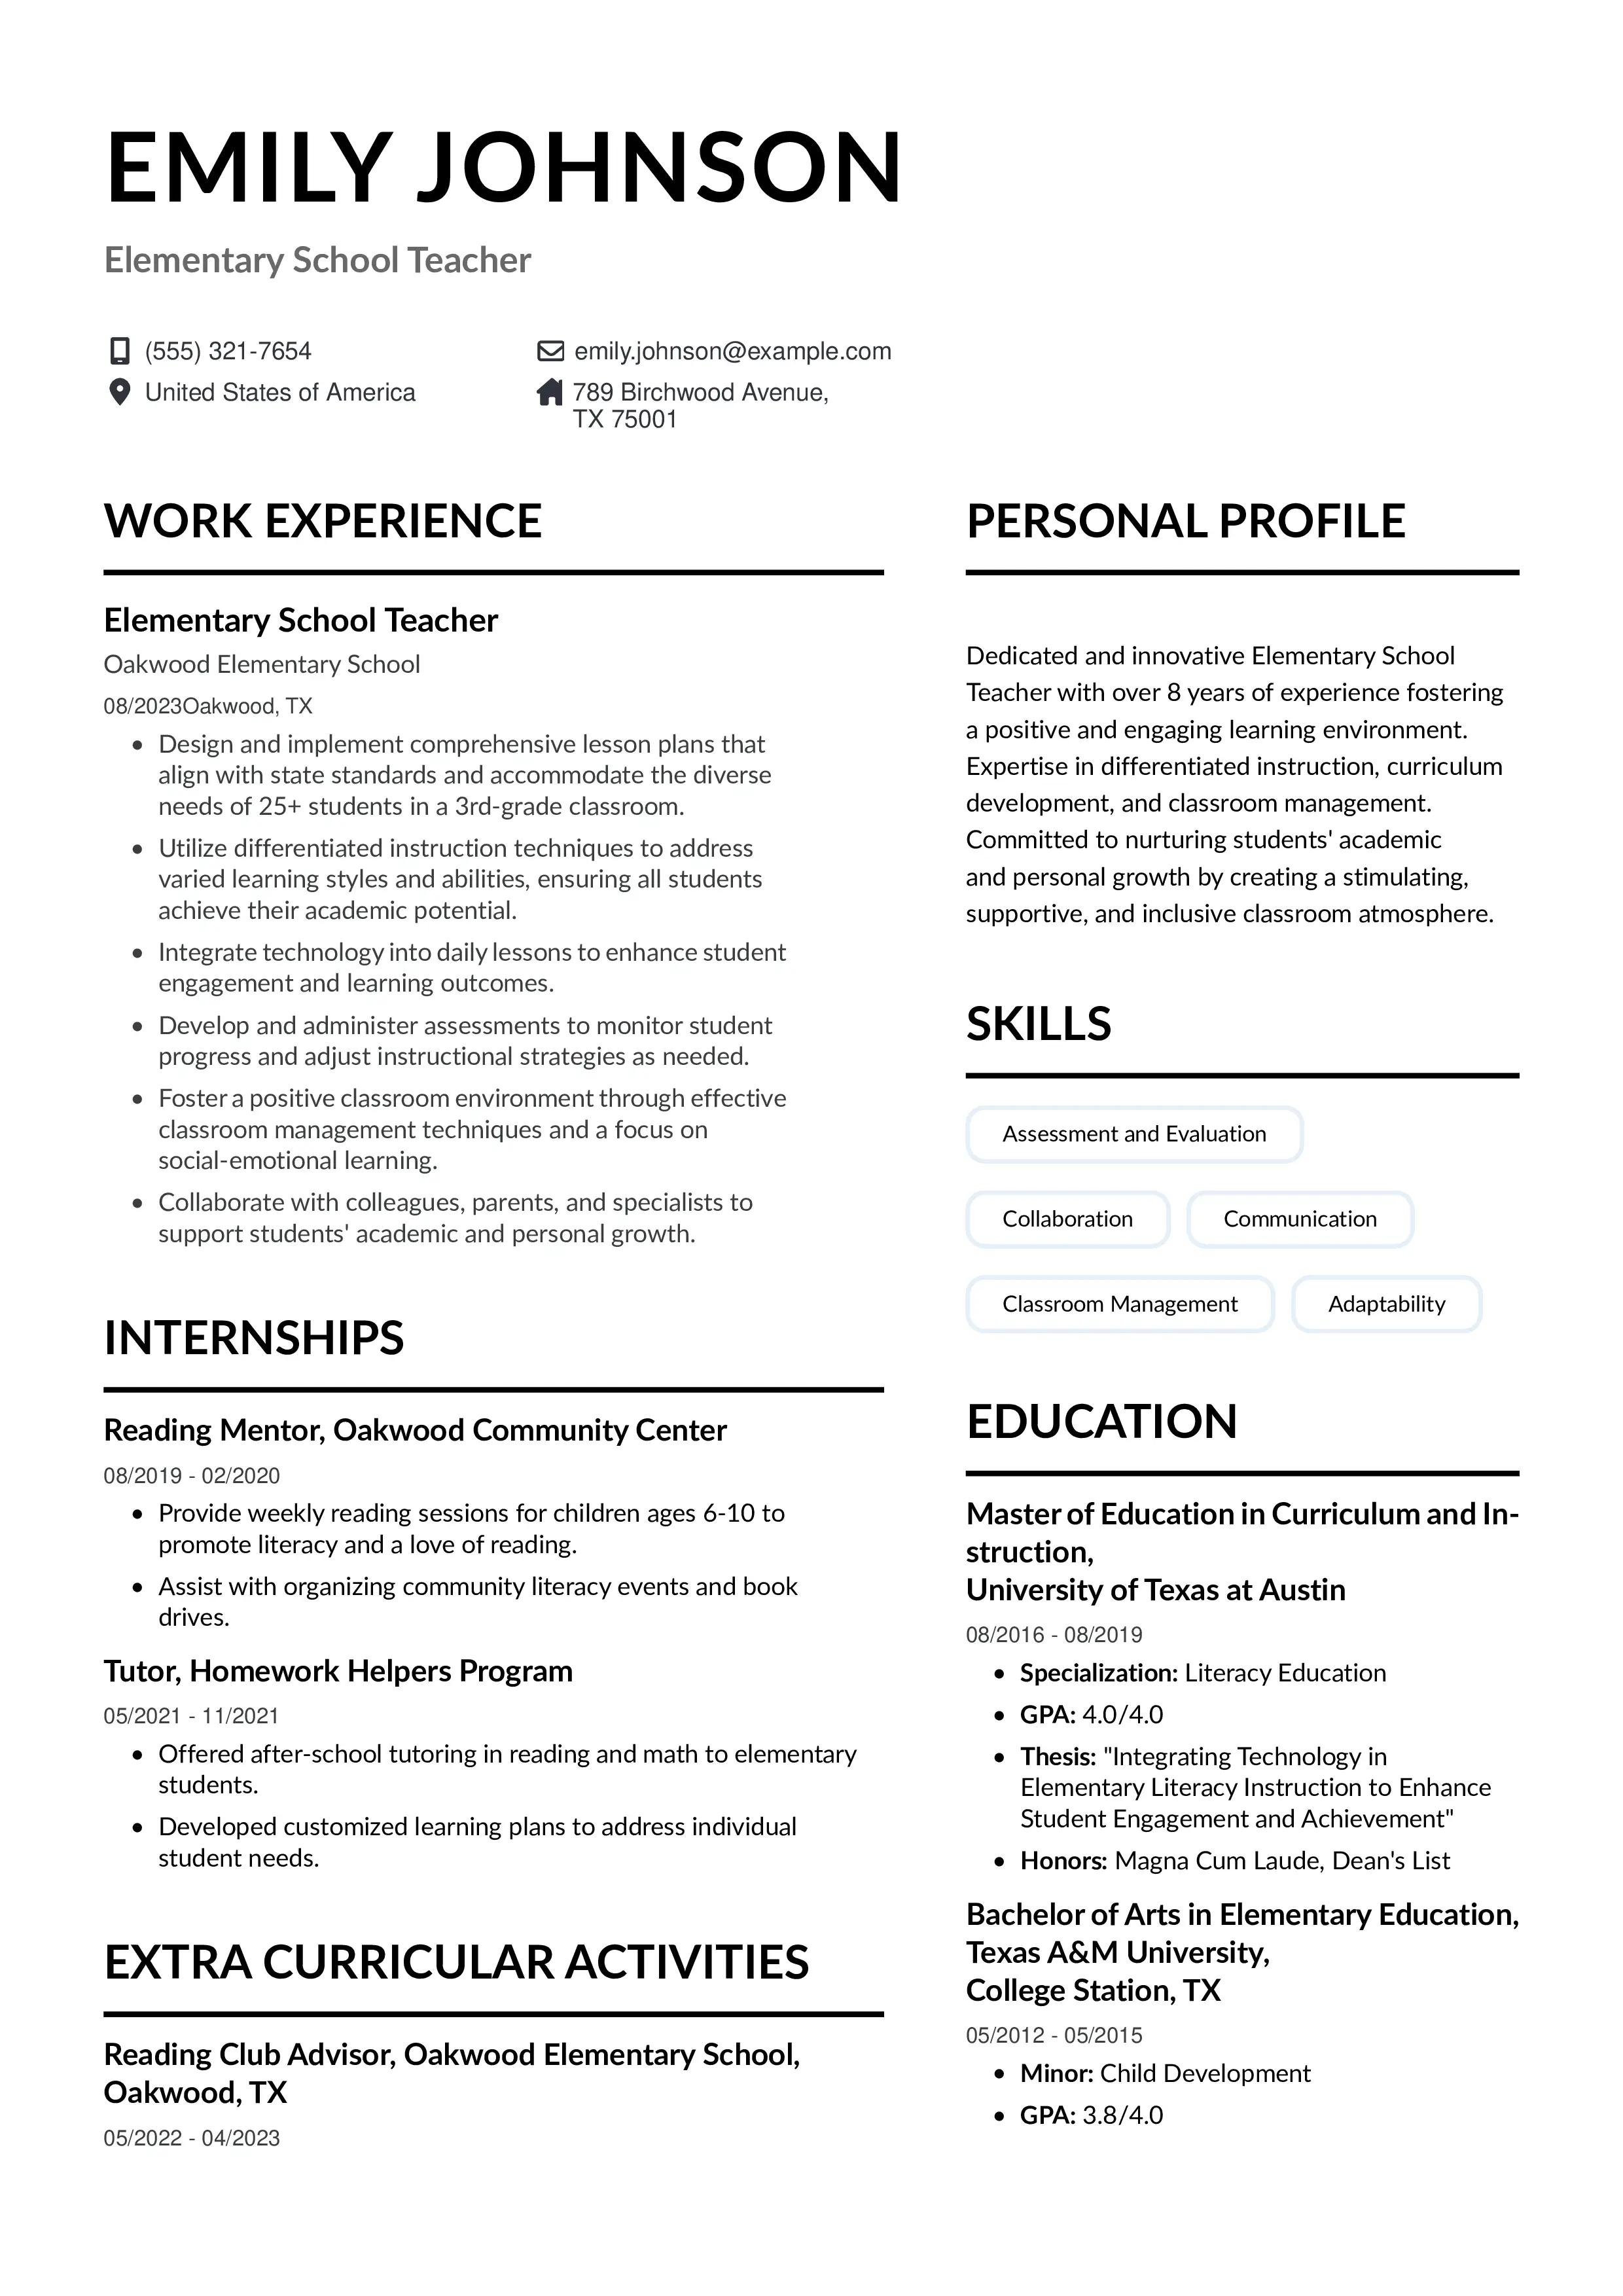 Resume example of Elementary teacher resume using instaresume.io template